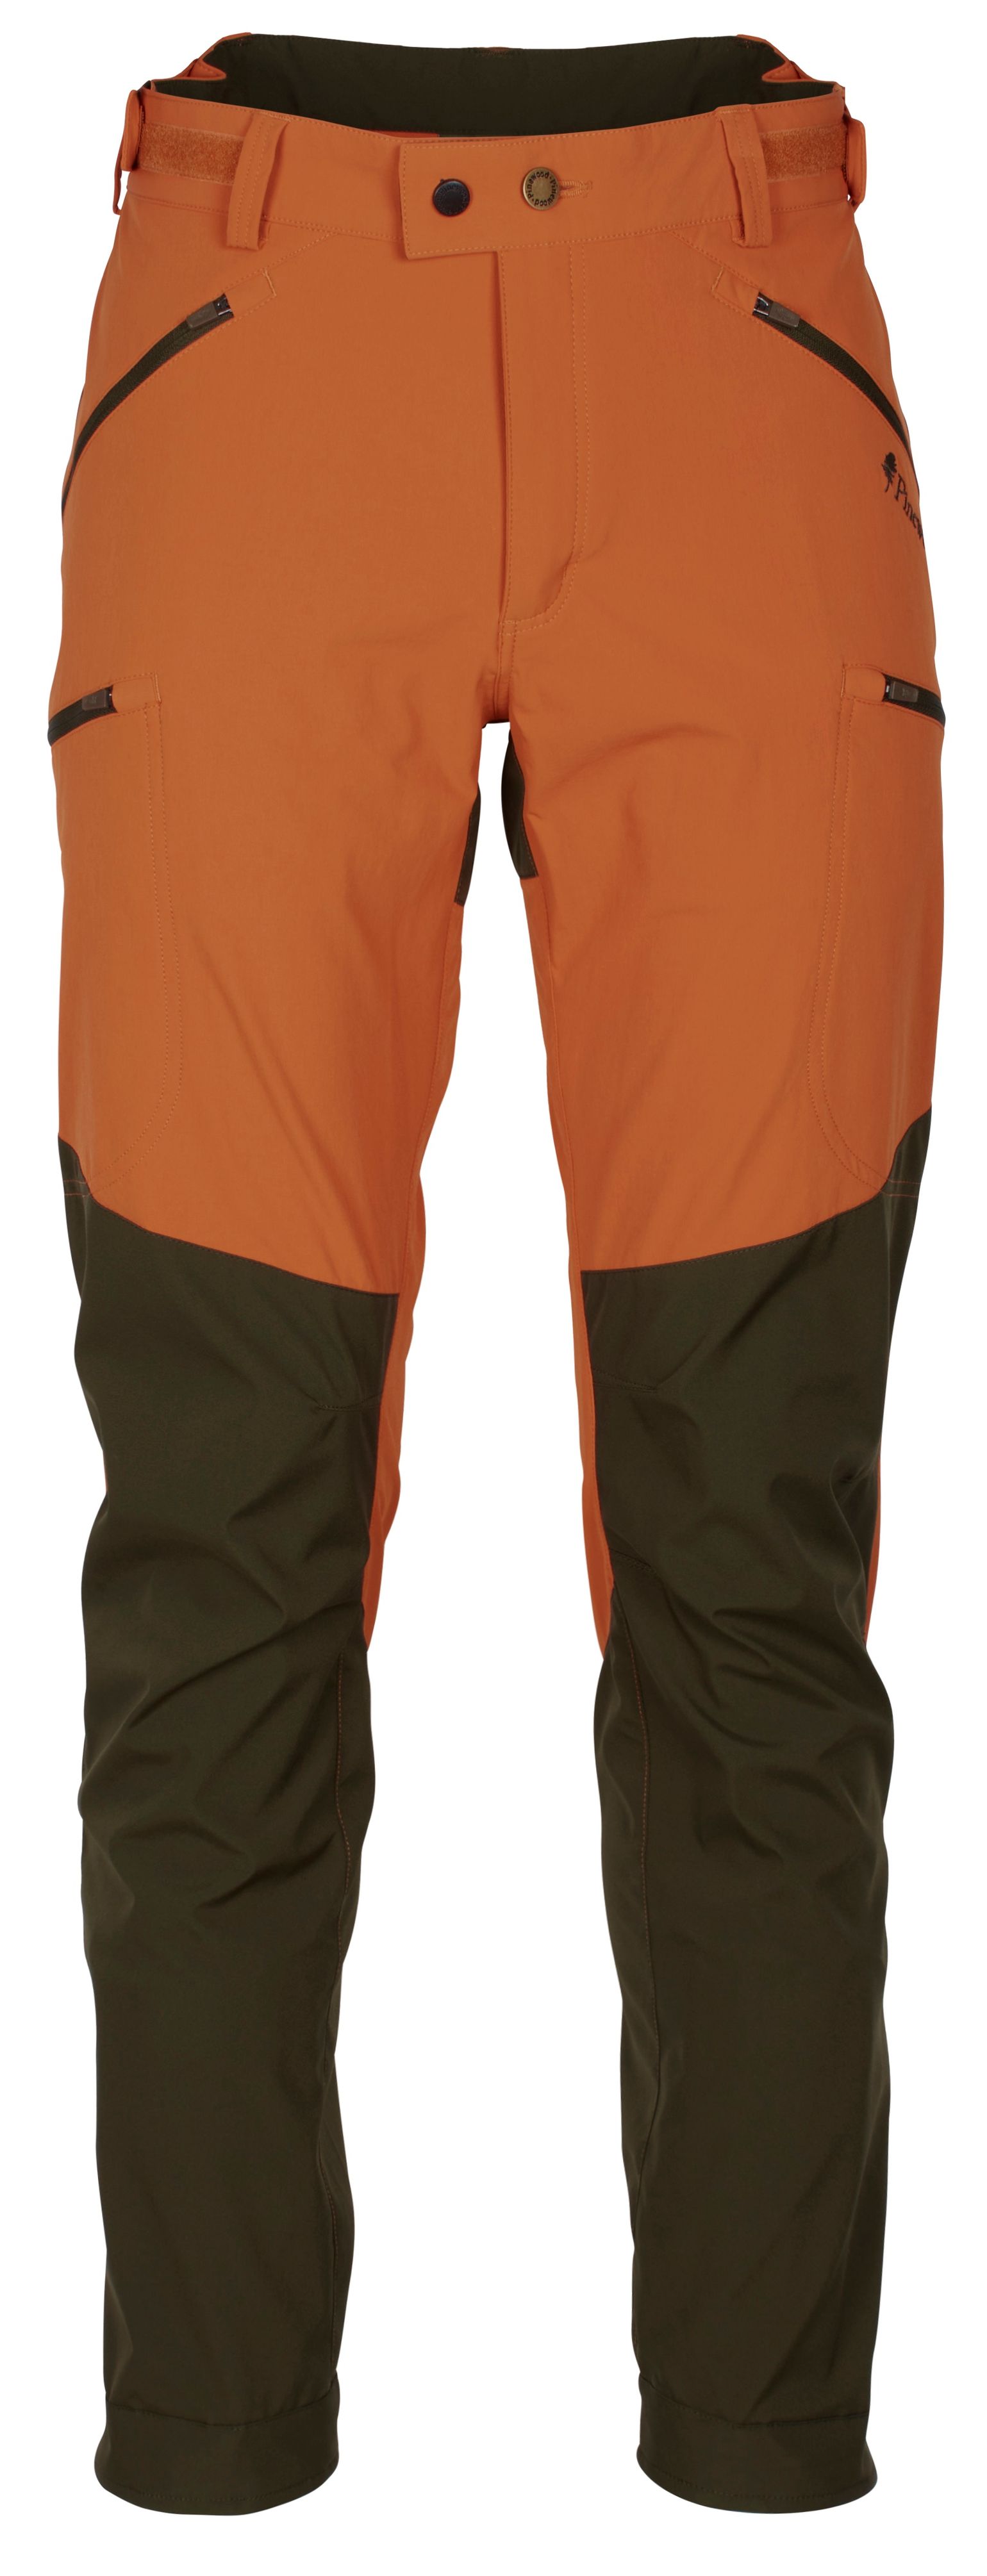 Pinewood Men's Abisko/Brenton Pants Burned Orange/Mossgreen